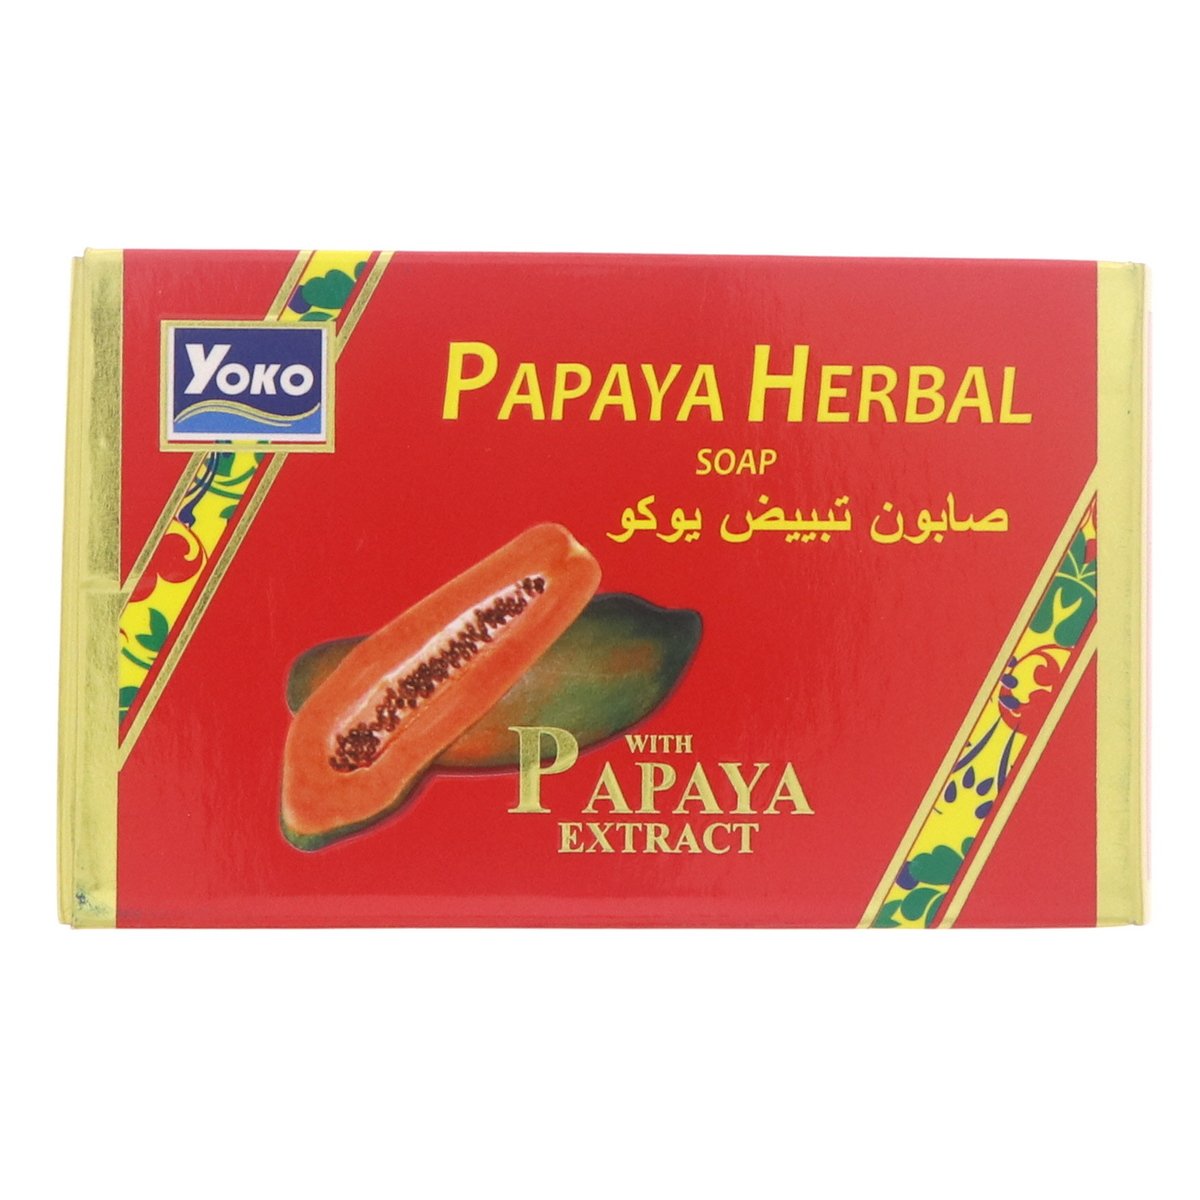 Yoko Papaya Herbal Soap With Papaya Extract 135 g